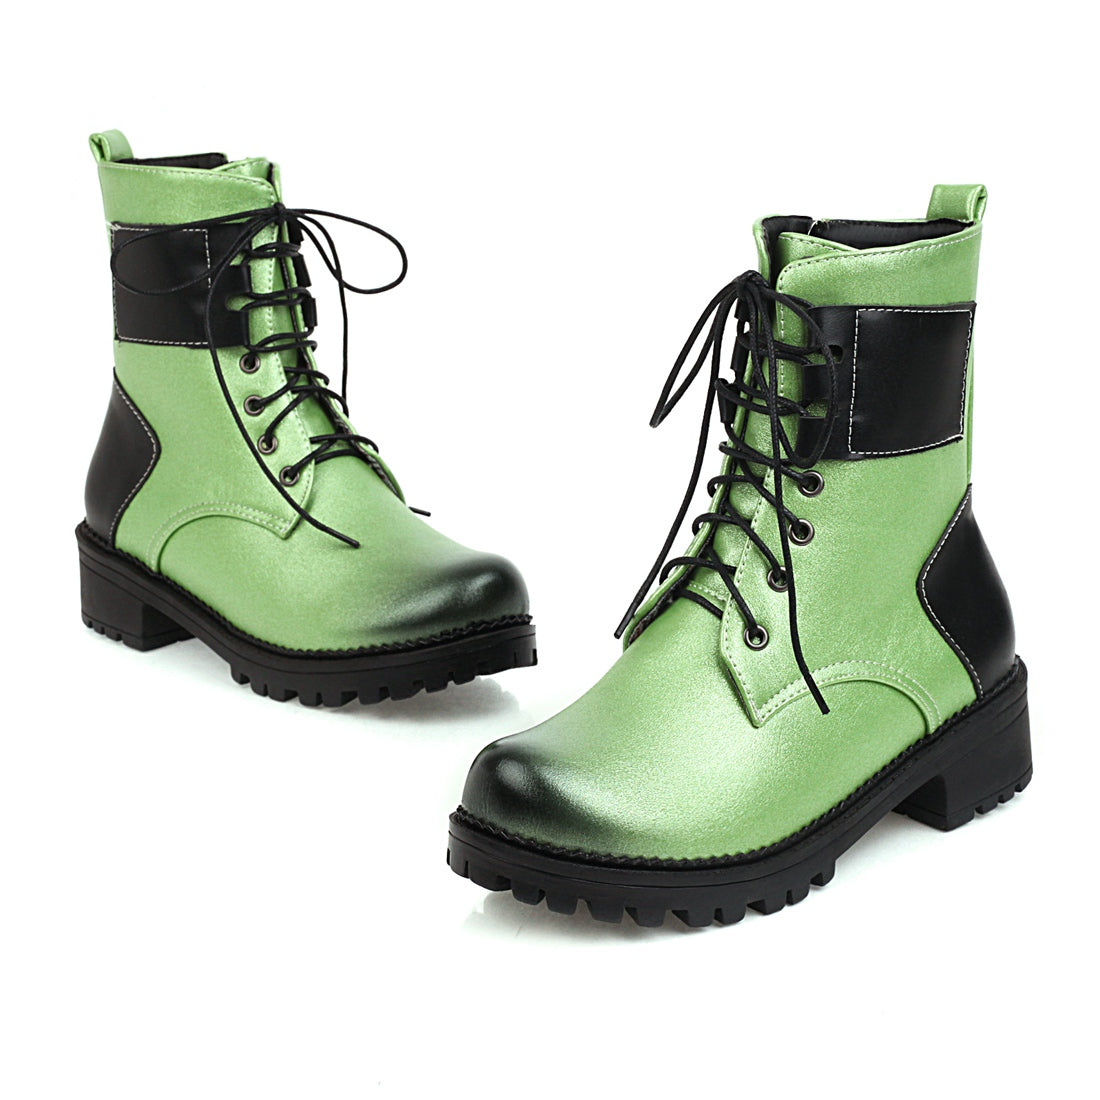 Bigsizeheels Colorblock retro fashion Martin boots - Green freeshipping - bigsizeheel®-size5-size15 -All Plus Sizes Available!